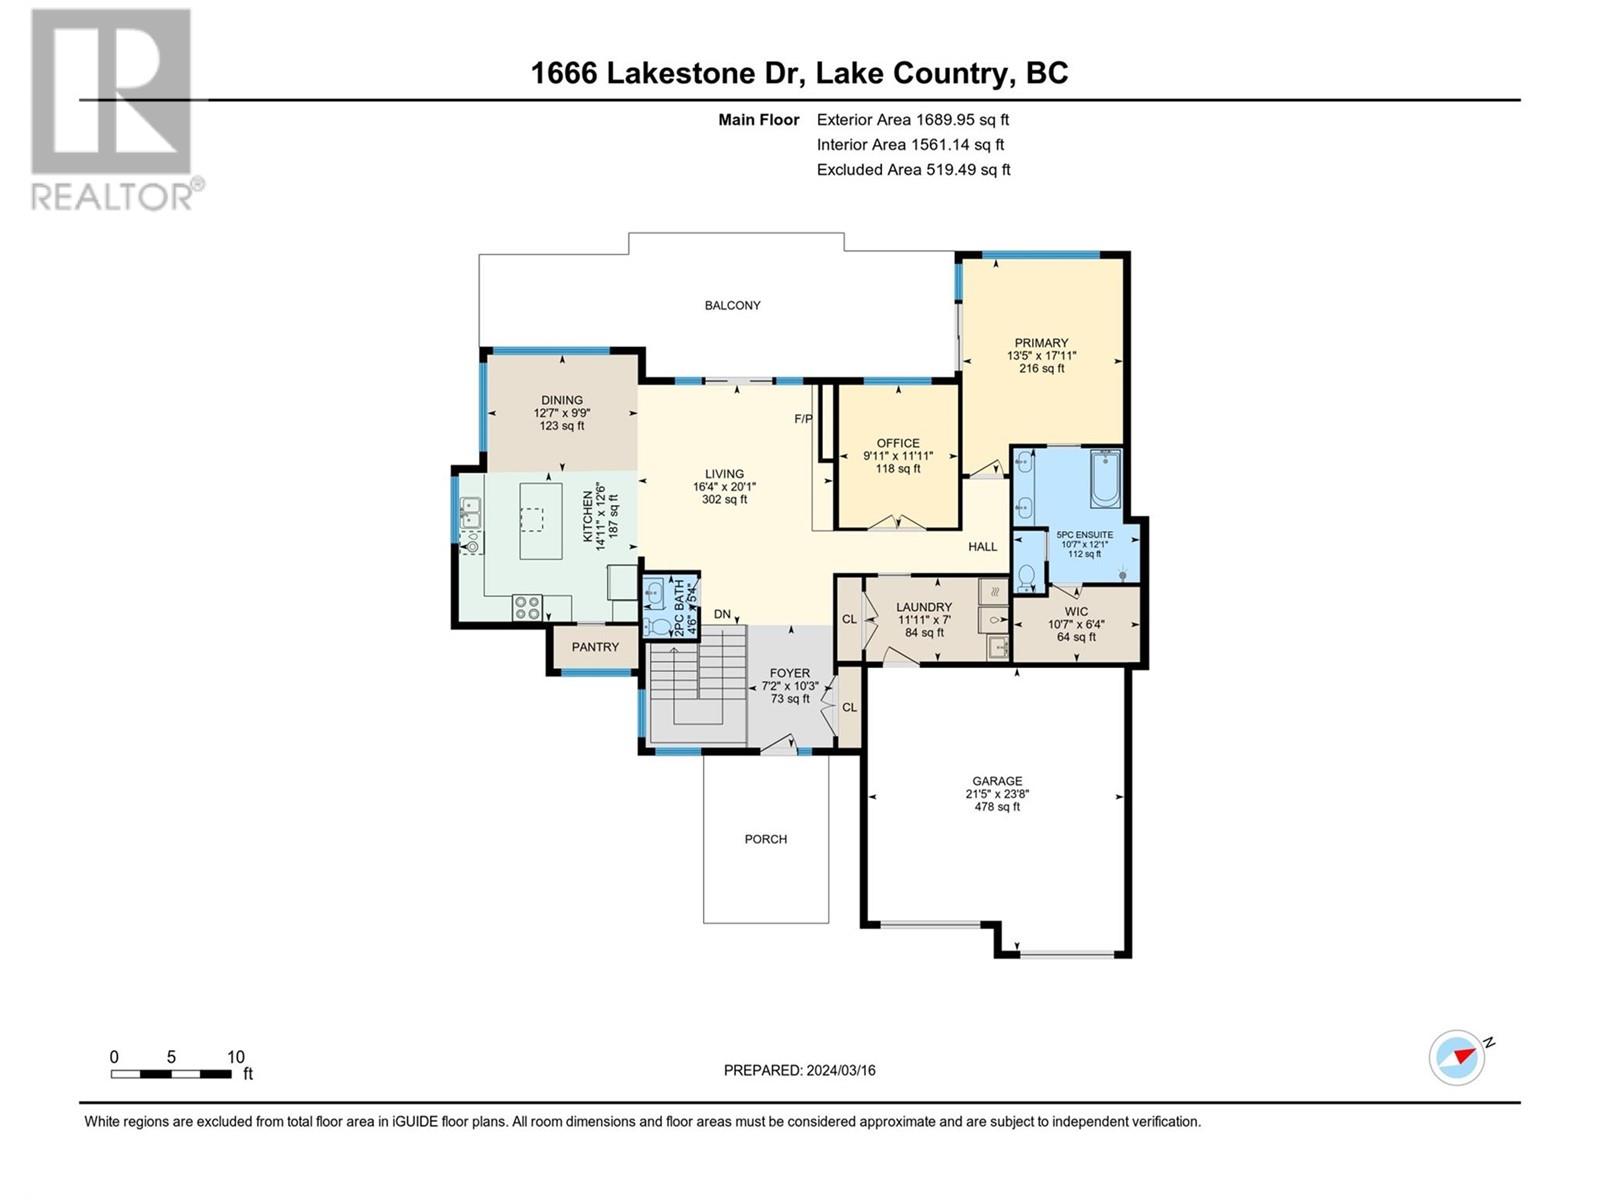 1666 Lakestone Drive Lake Country